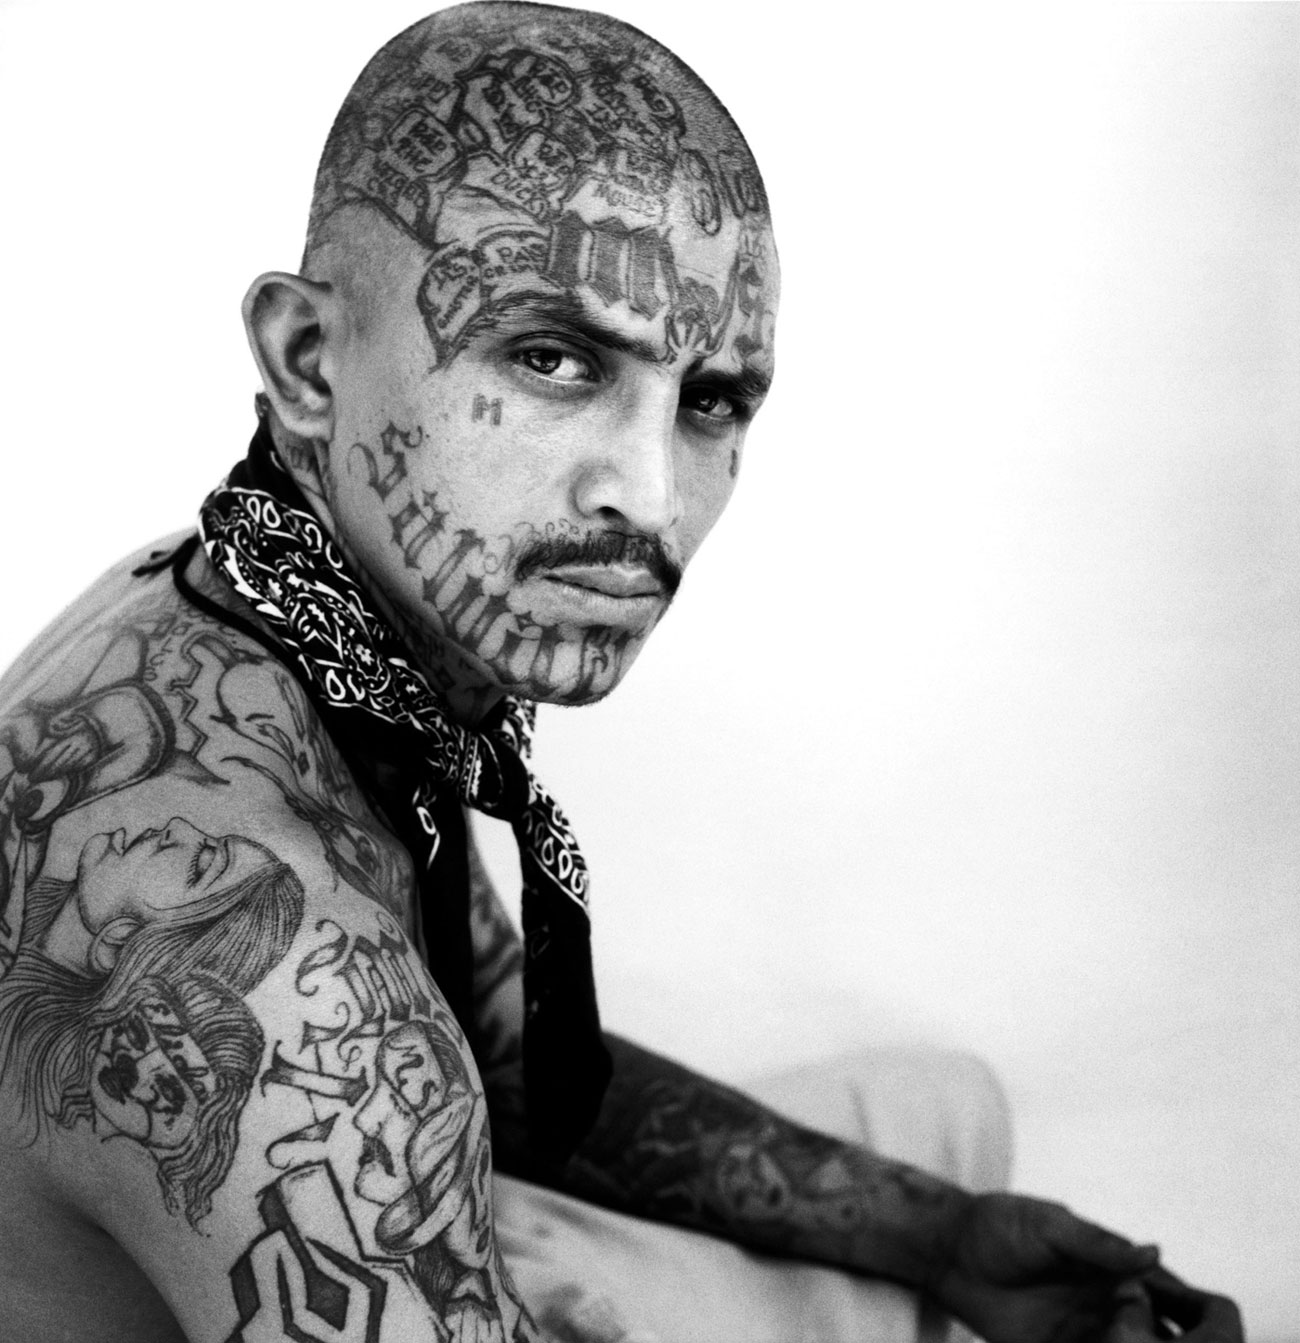 salvadoran gang member - Google Search | Ms-13, Face tattoos, Decomposed  body